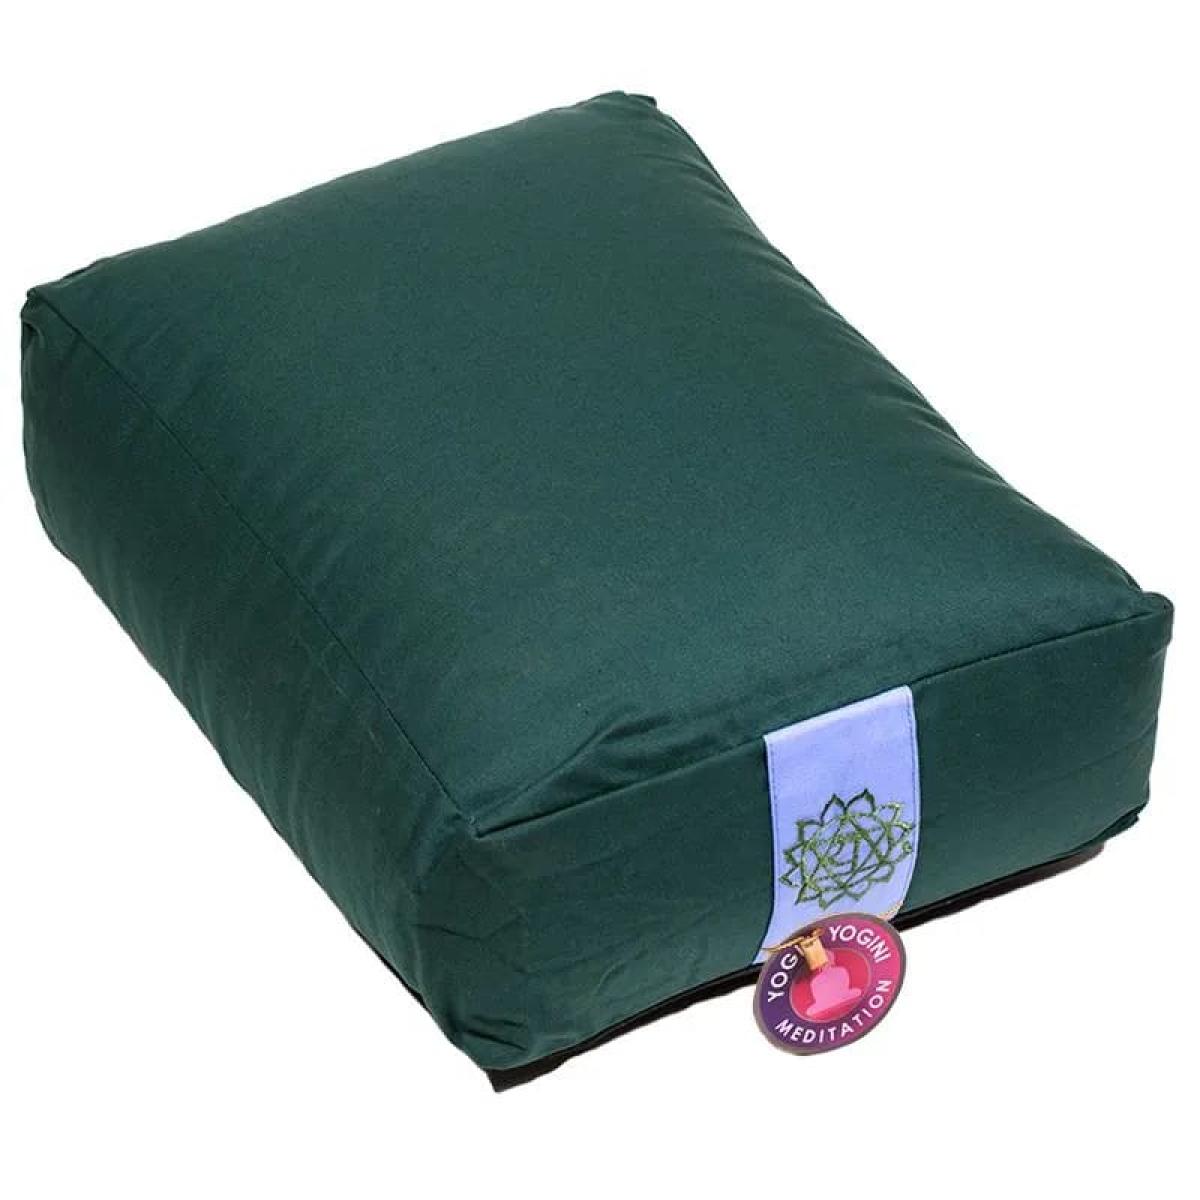 Meditation cushion set 7 chakras - rectangular ➤ www.bokken-shop.de buy › Yoga cushions ✓ Suitable for meditation, seminars. Your meditation specialist shop!